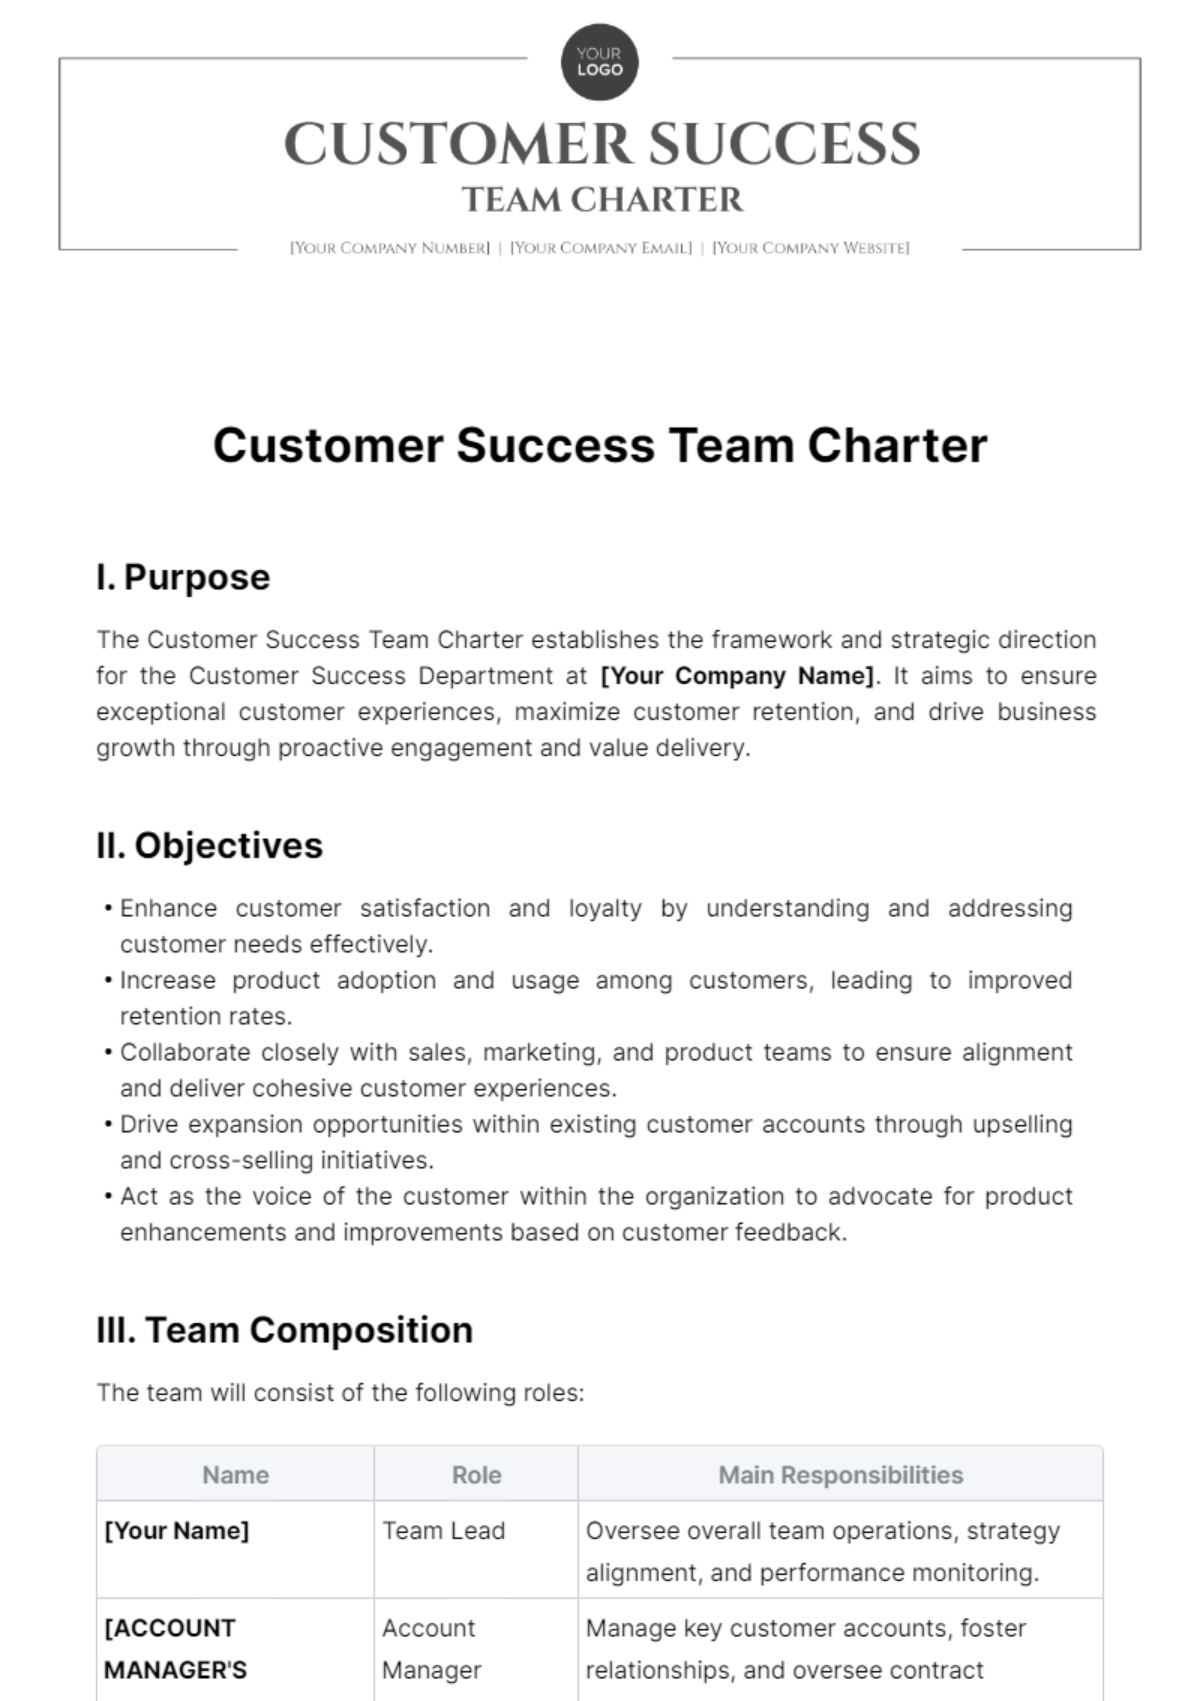 Free Customer Success Team Charter Template